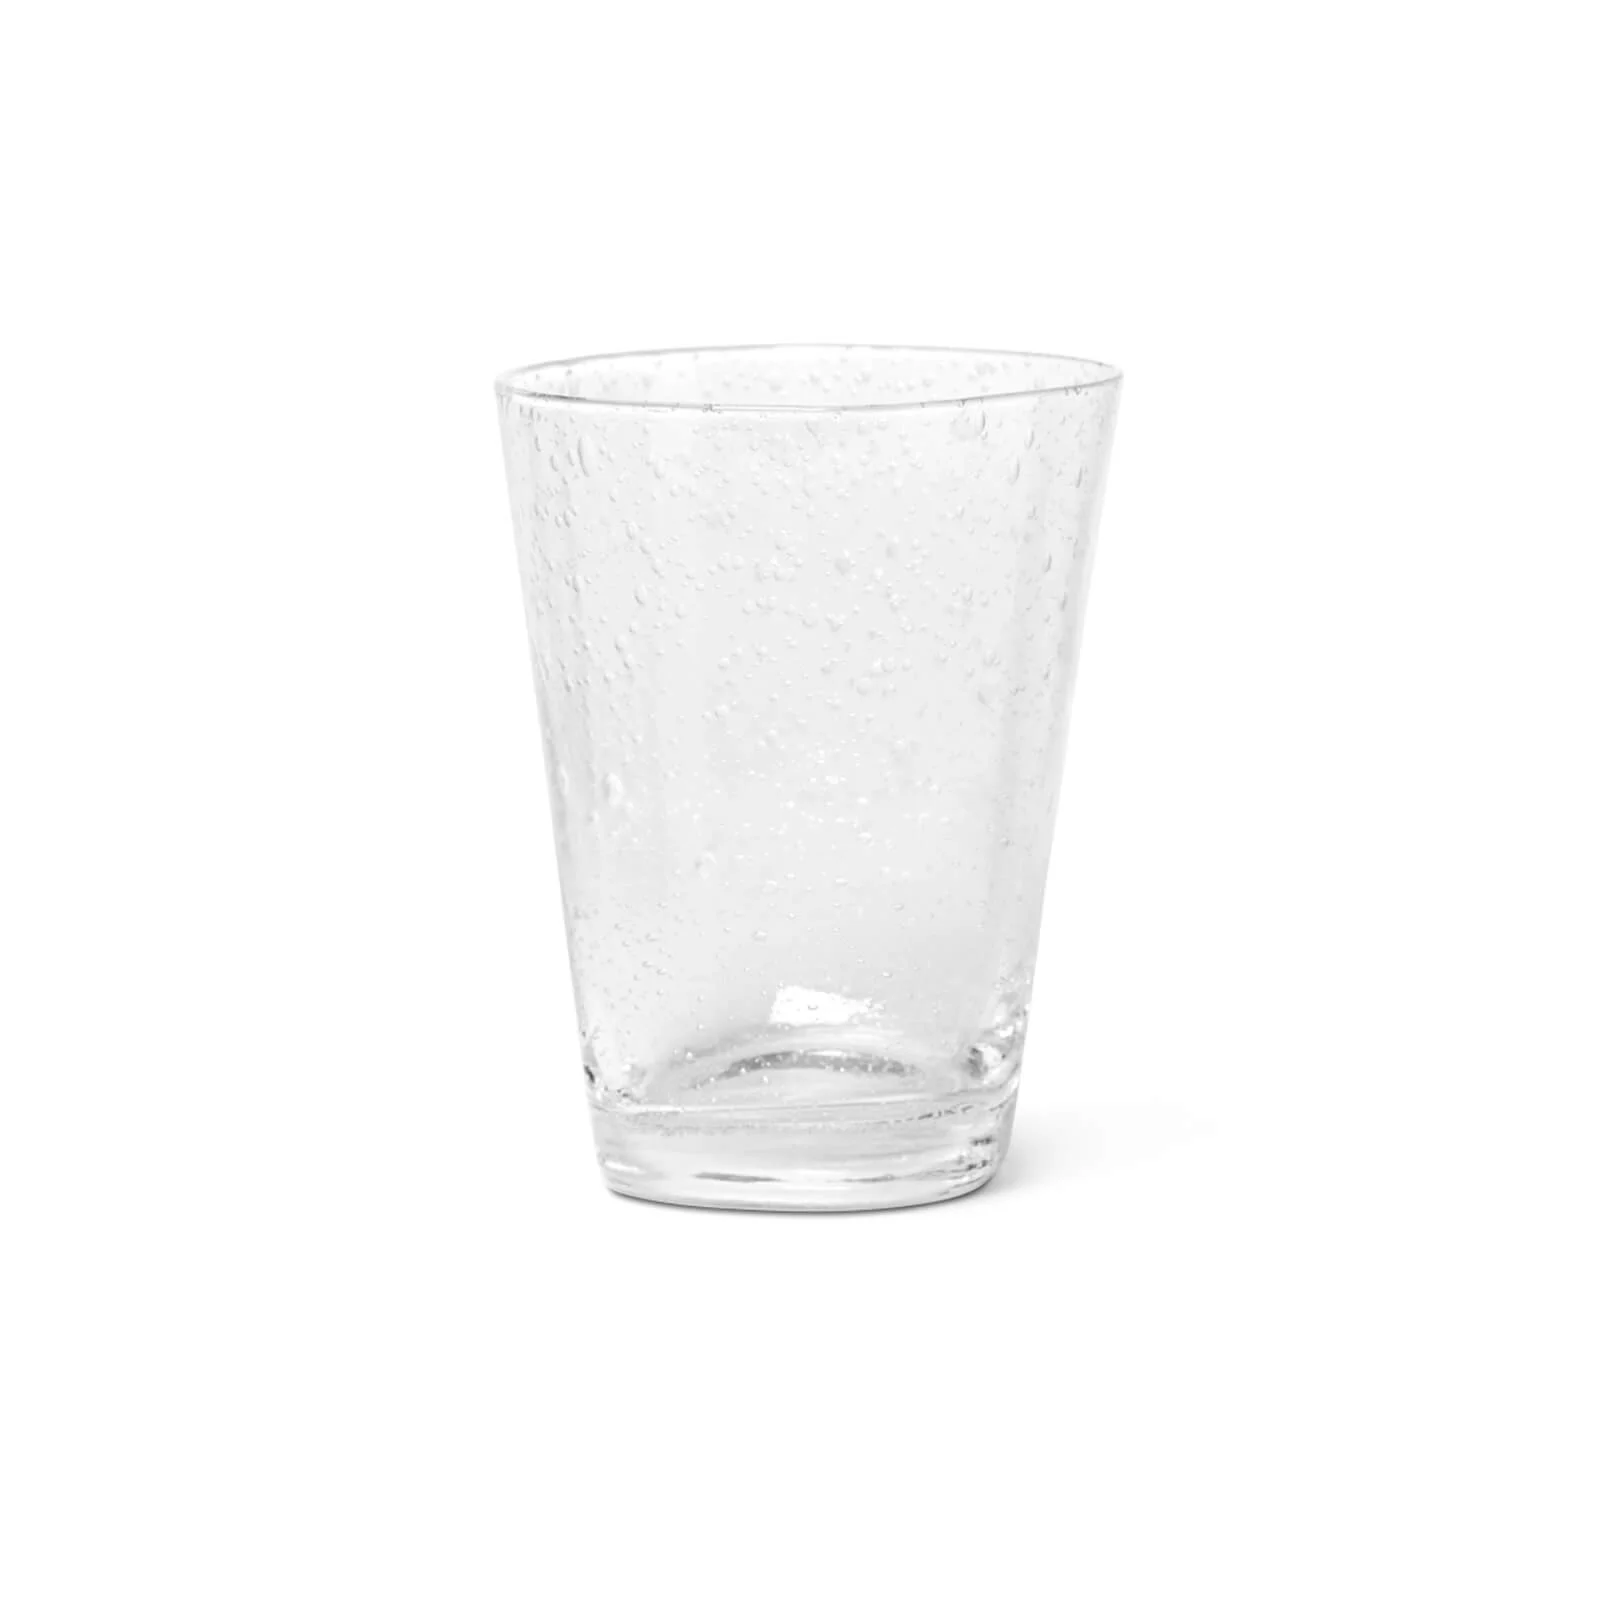 Ferm Living Brus Tumbler Glass - Clear Image 1